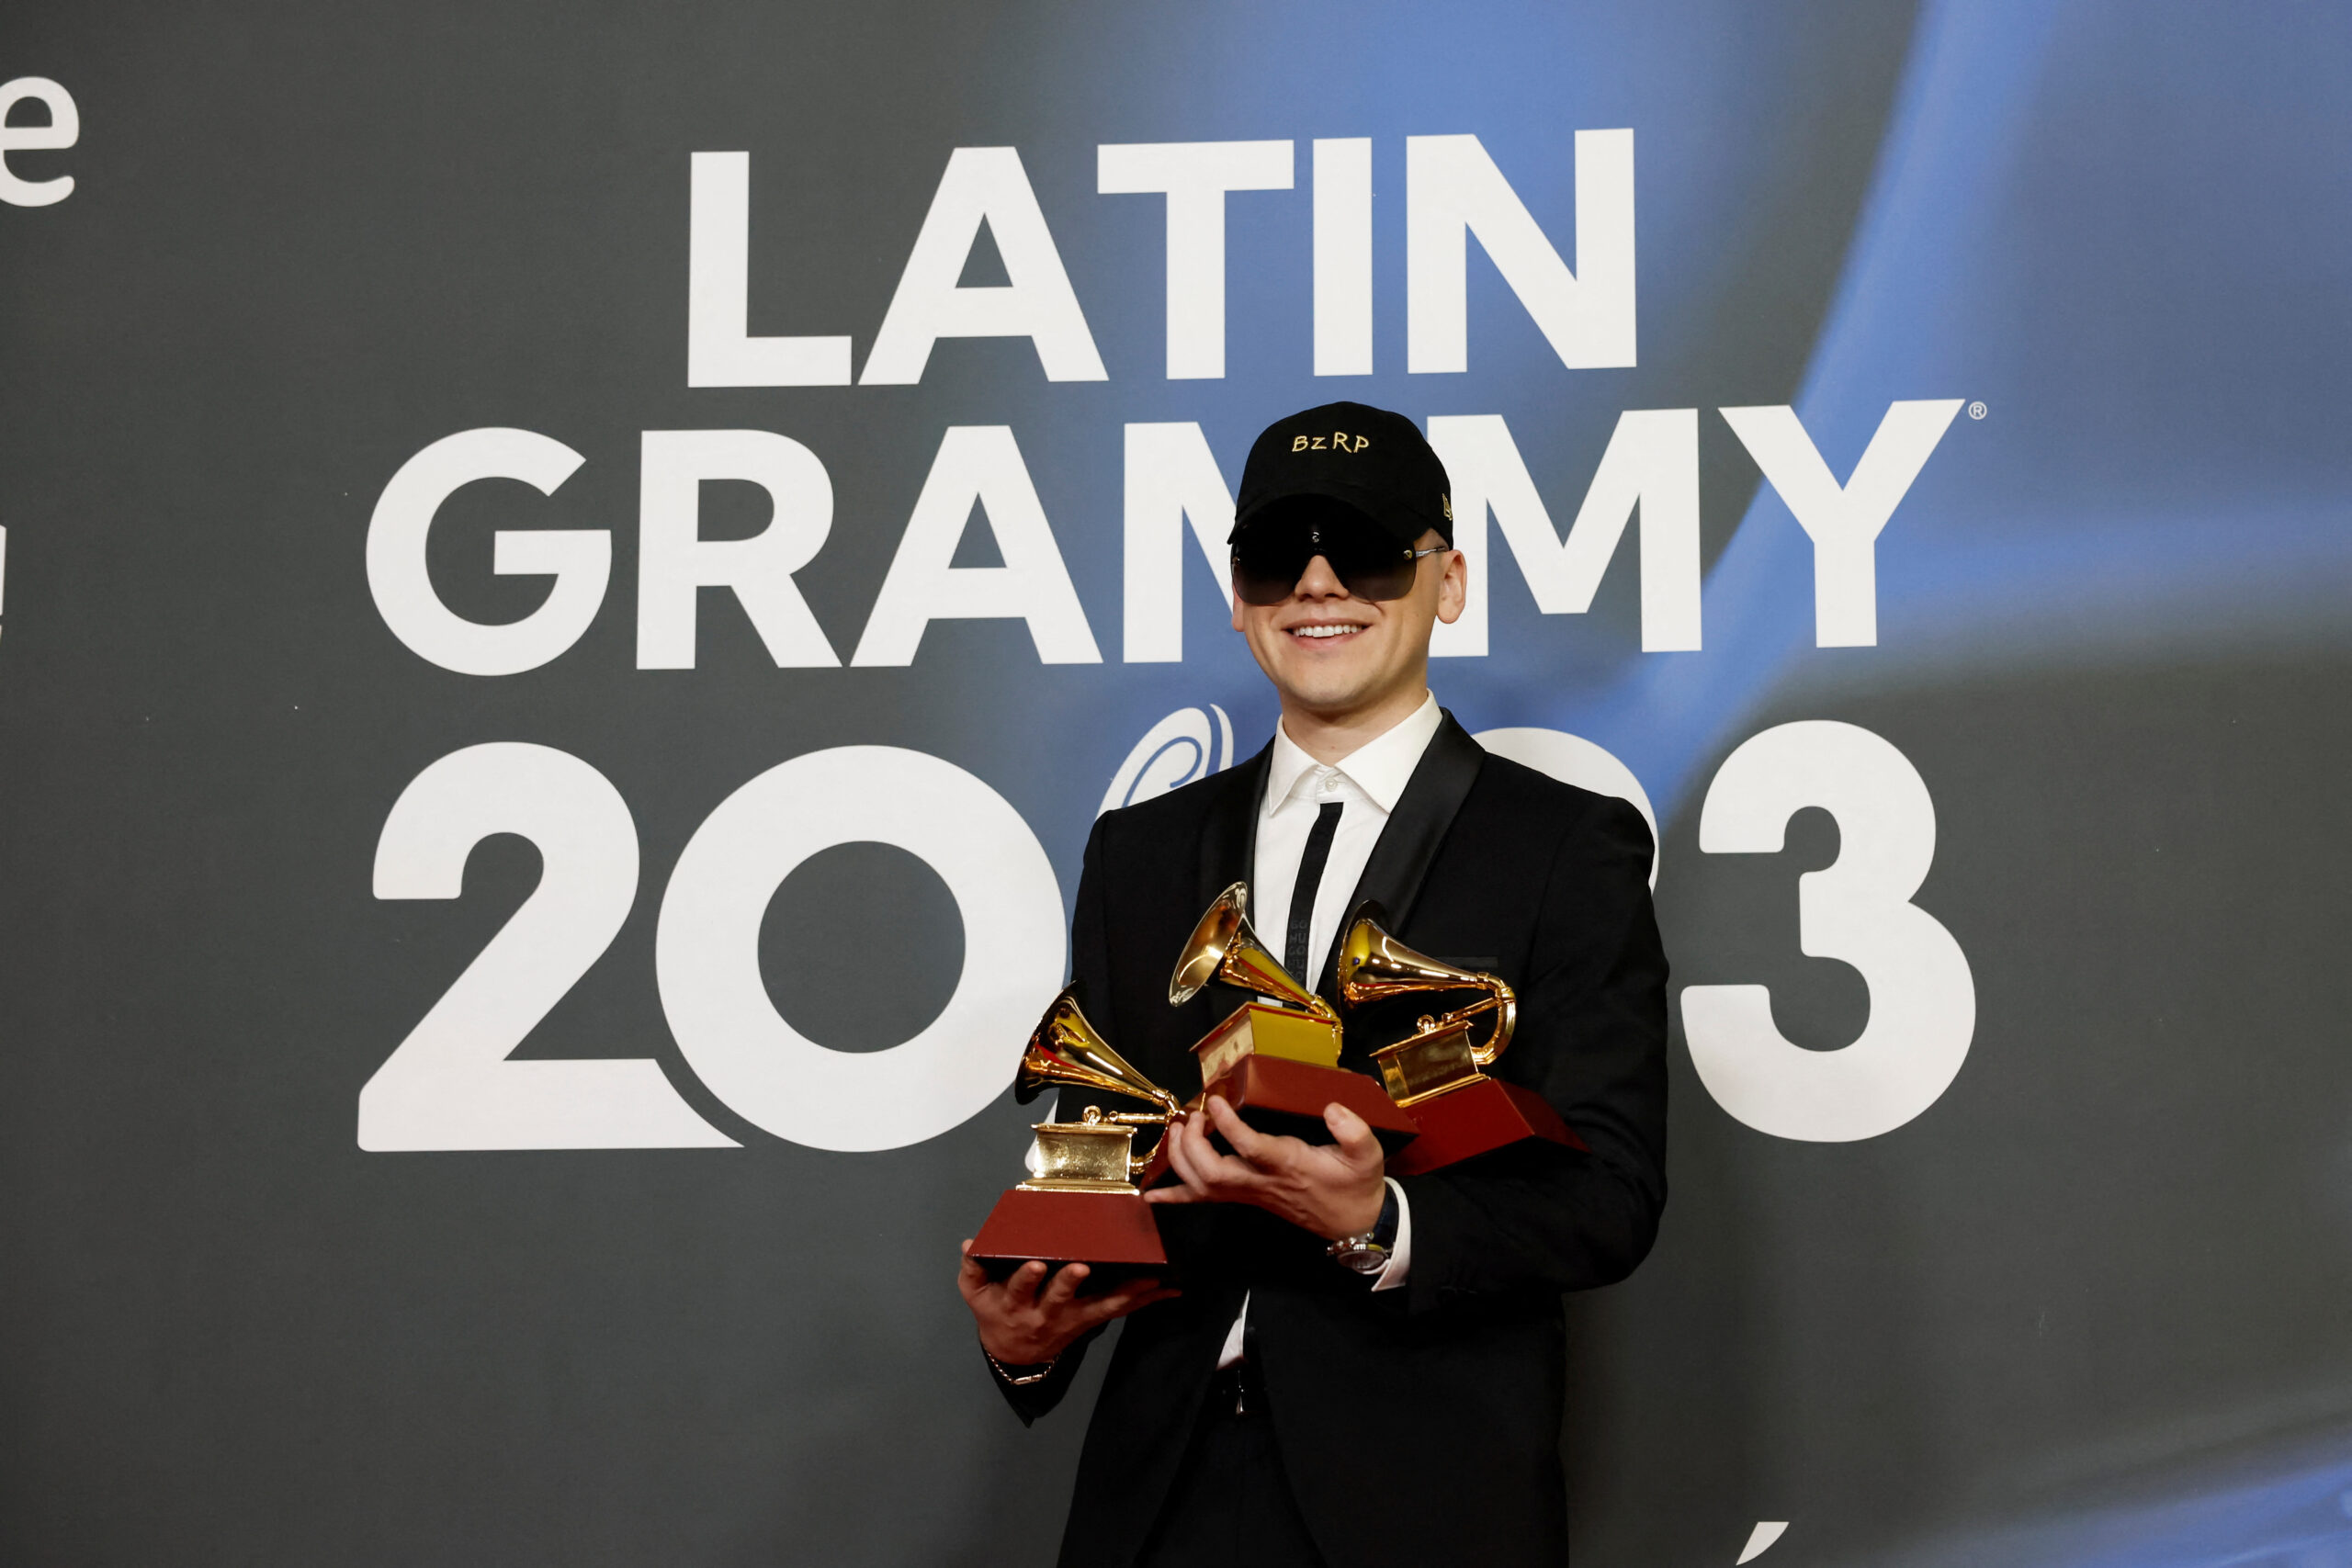 Bizarrap leads Argentina’s impressive Latin Grammy showing